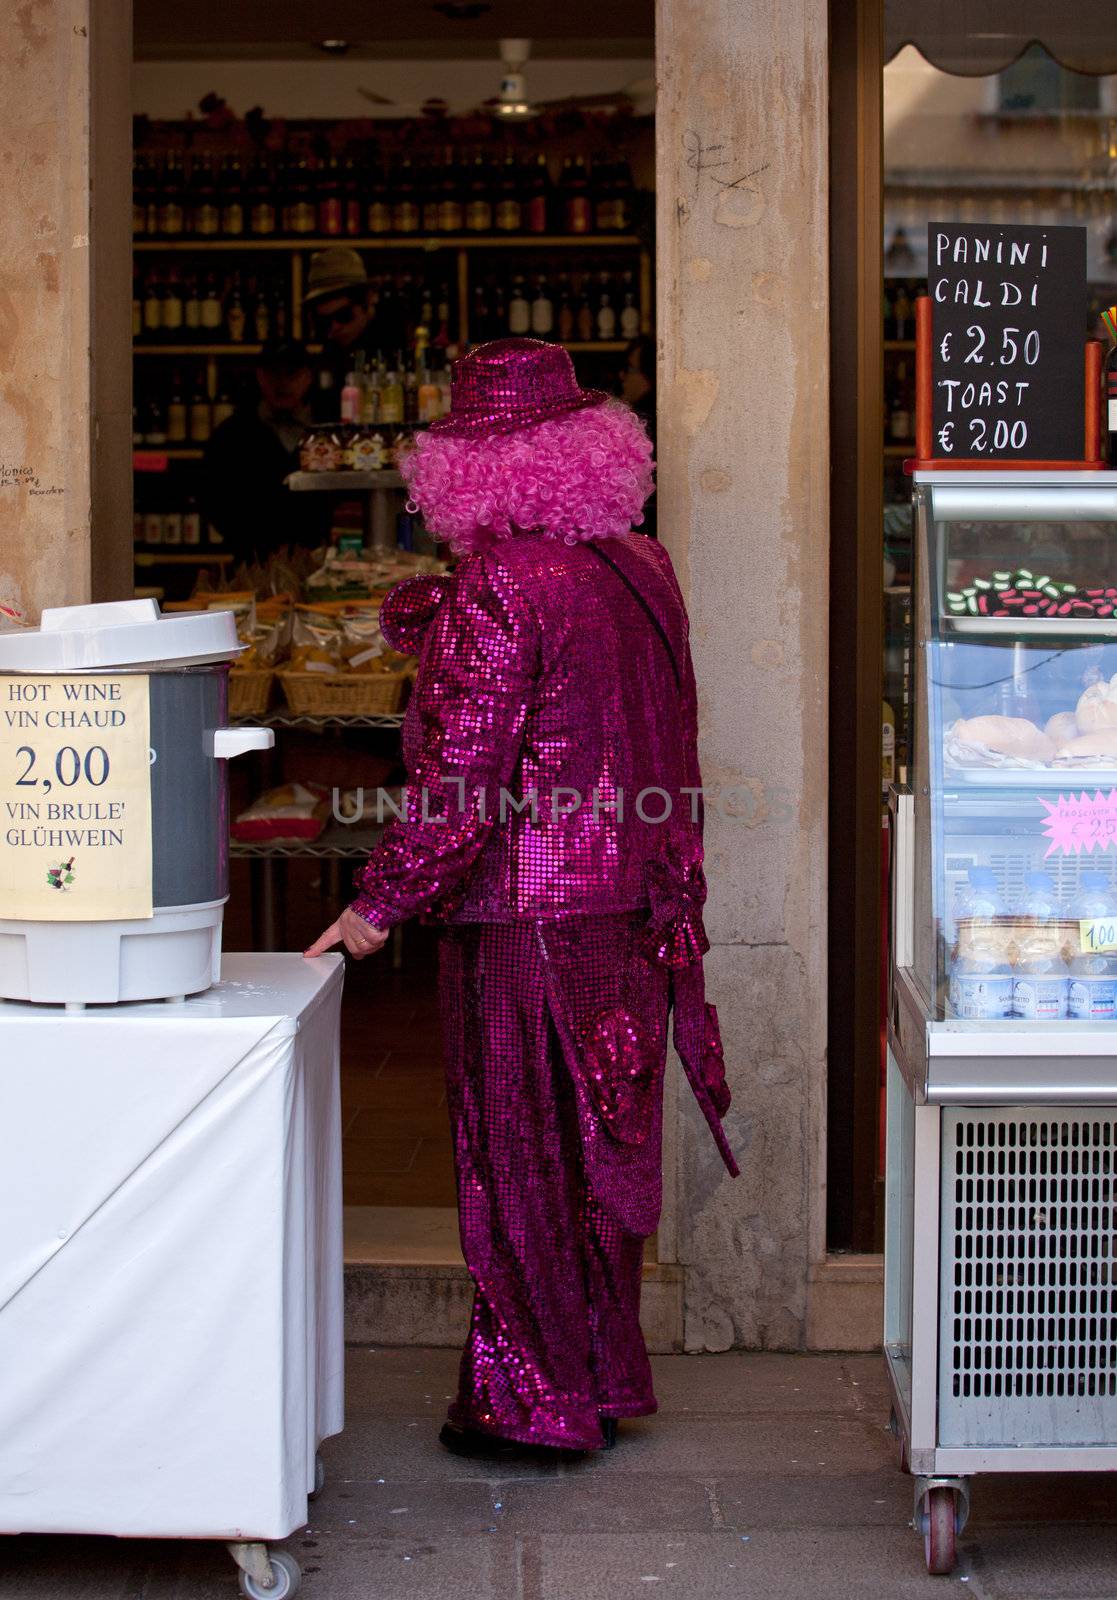 Clown in the Venice carnival